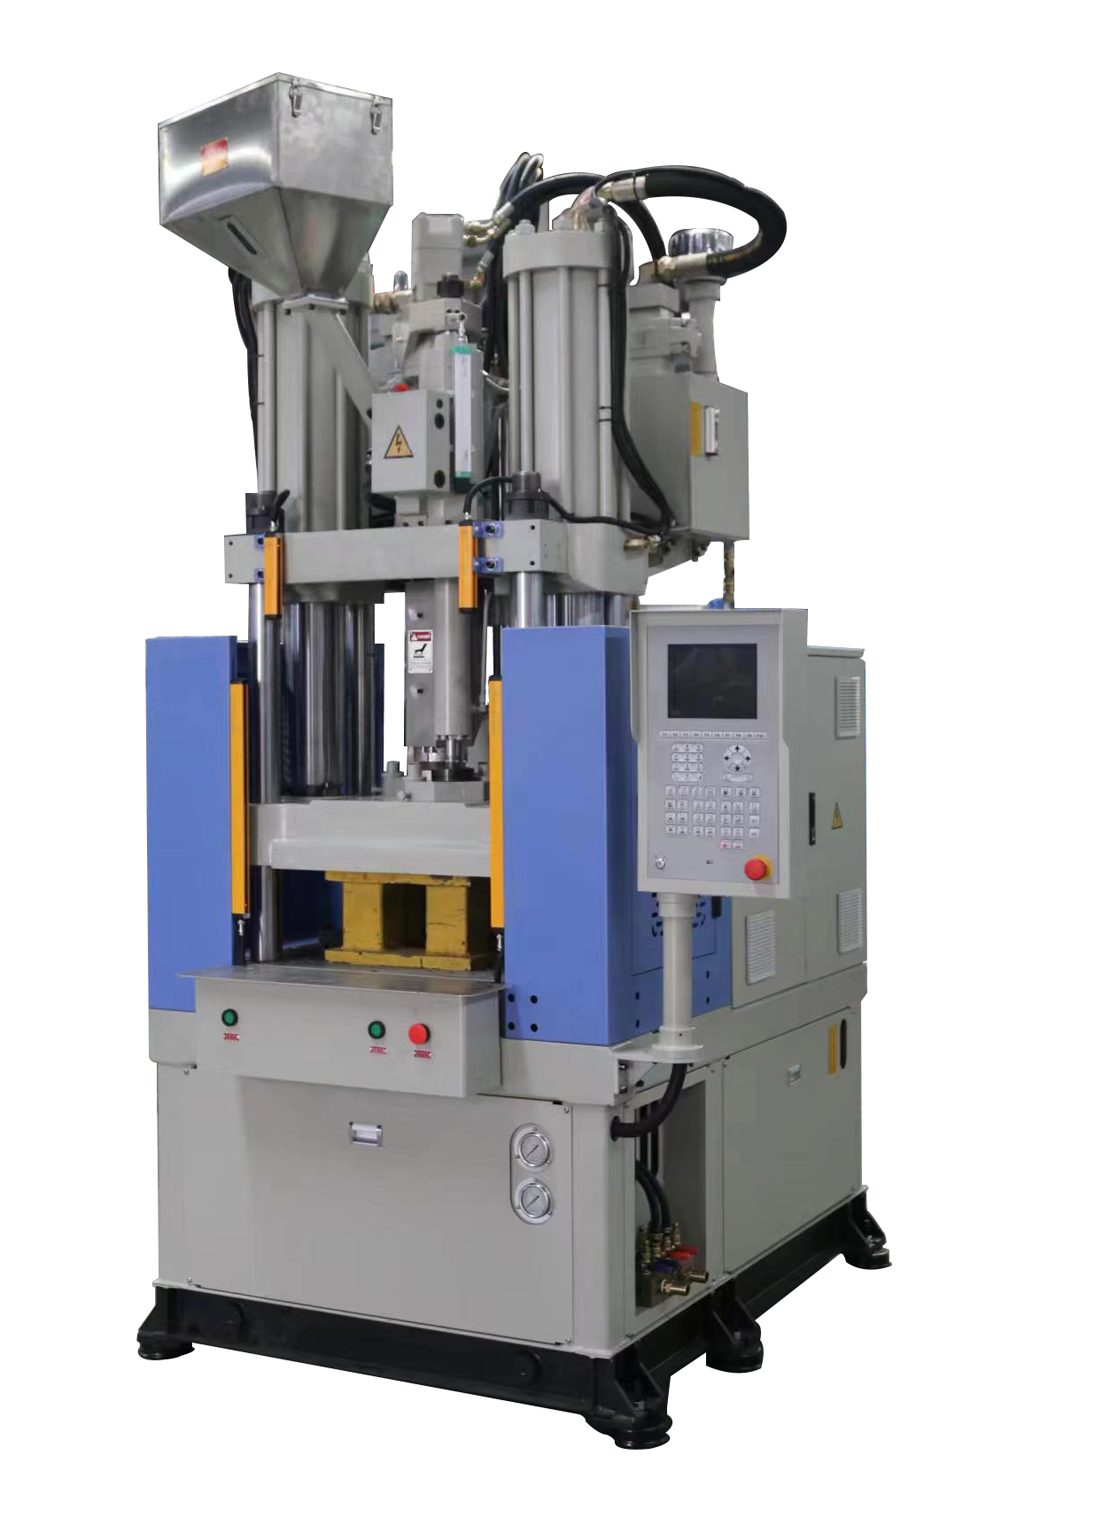 TYU-700.J vertical injection molding machine